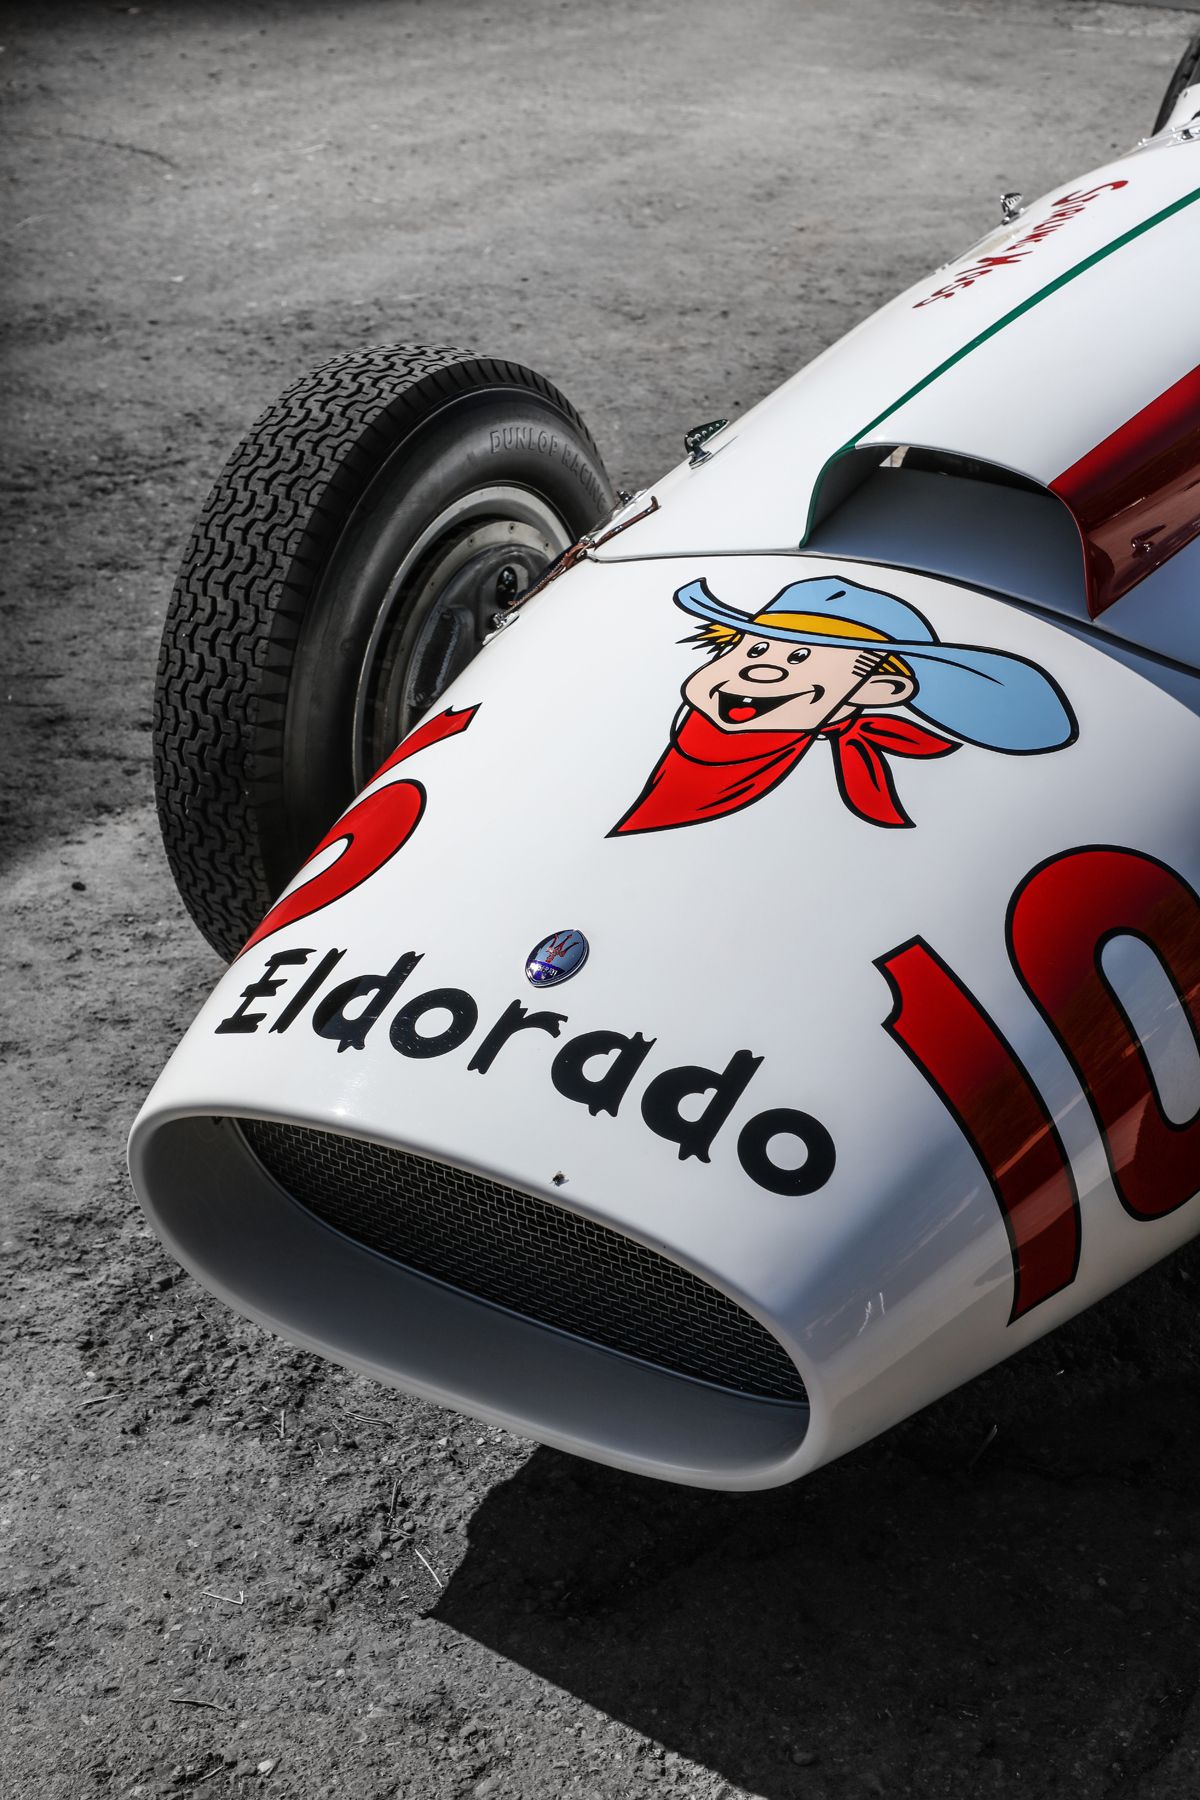 1958 Maserati Eldorado (3)